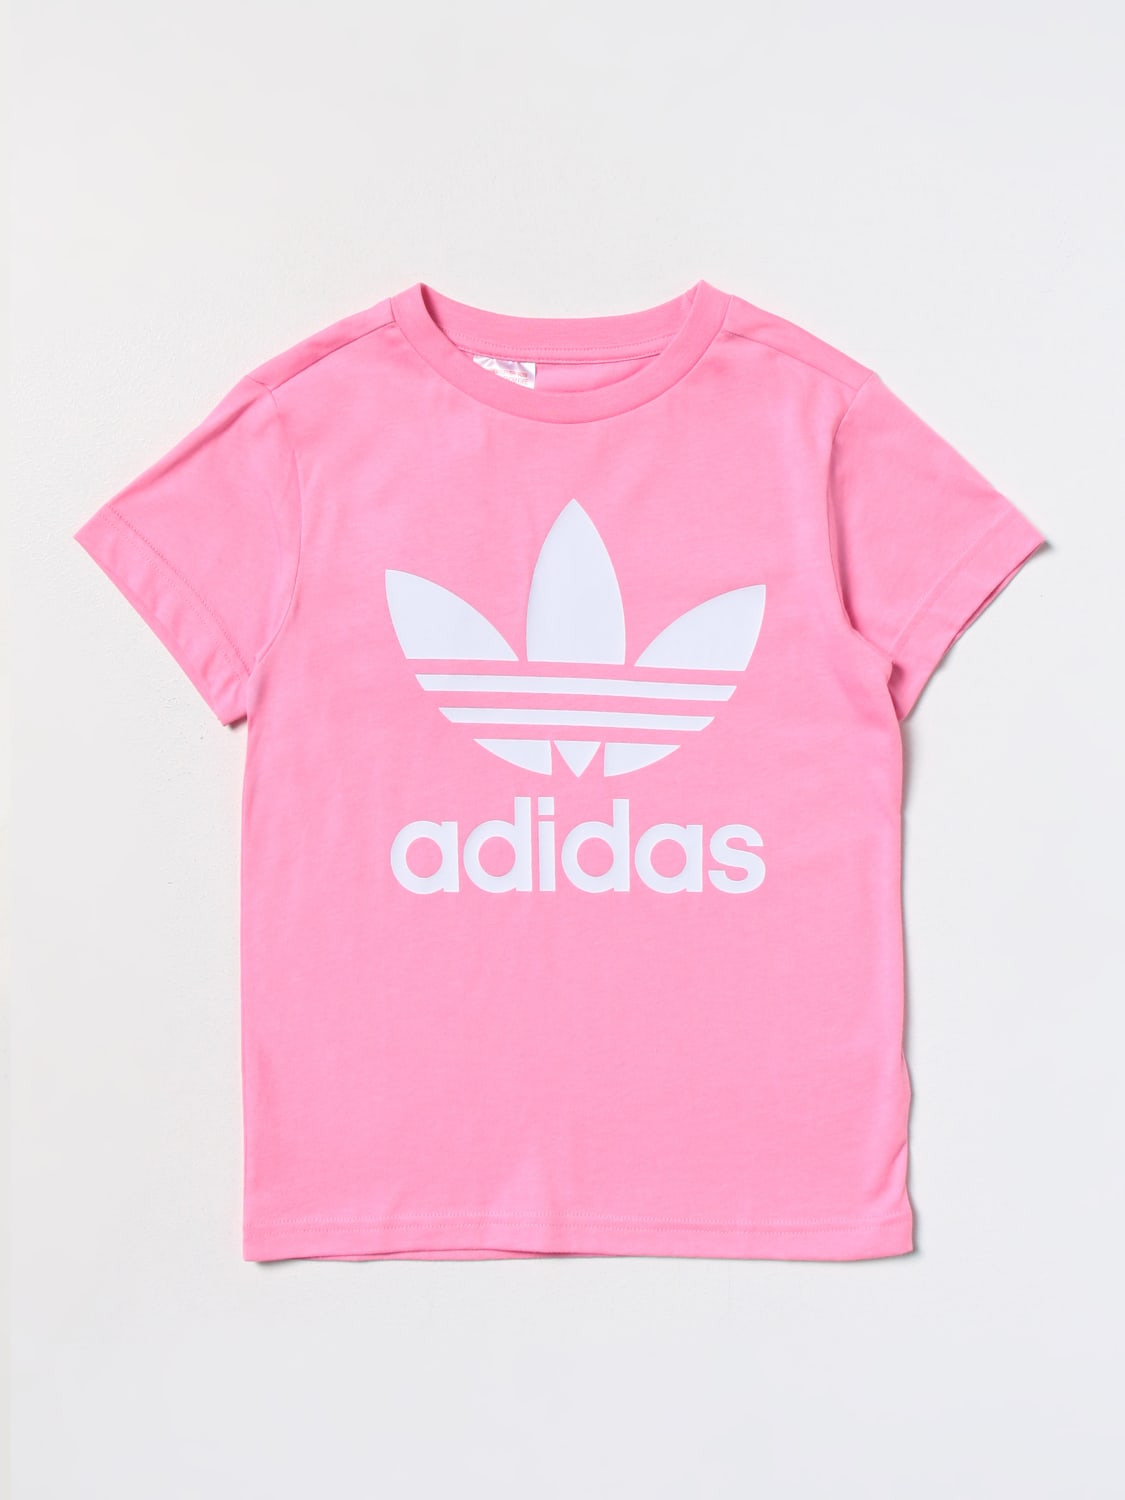 regeling Reageren Onbevredigend ADIDAS ORIGINALS: t-shirt for girls - Pink | Adidas Originals t-shirt  IB9932 online on GIGLIO.COM